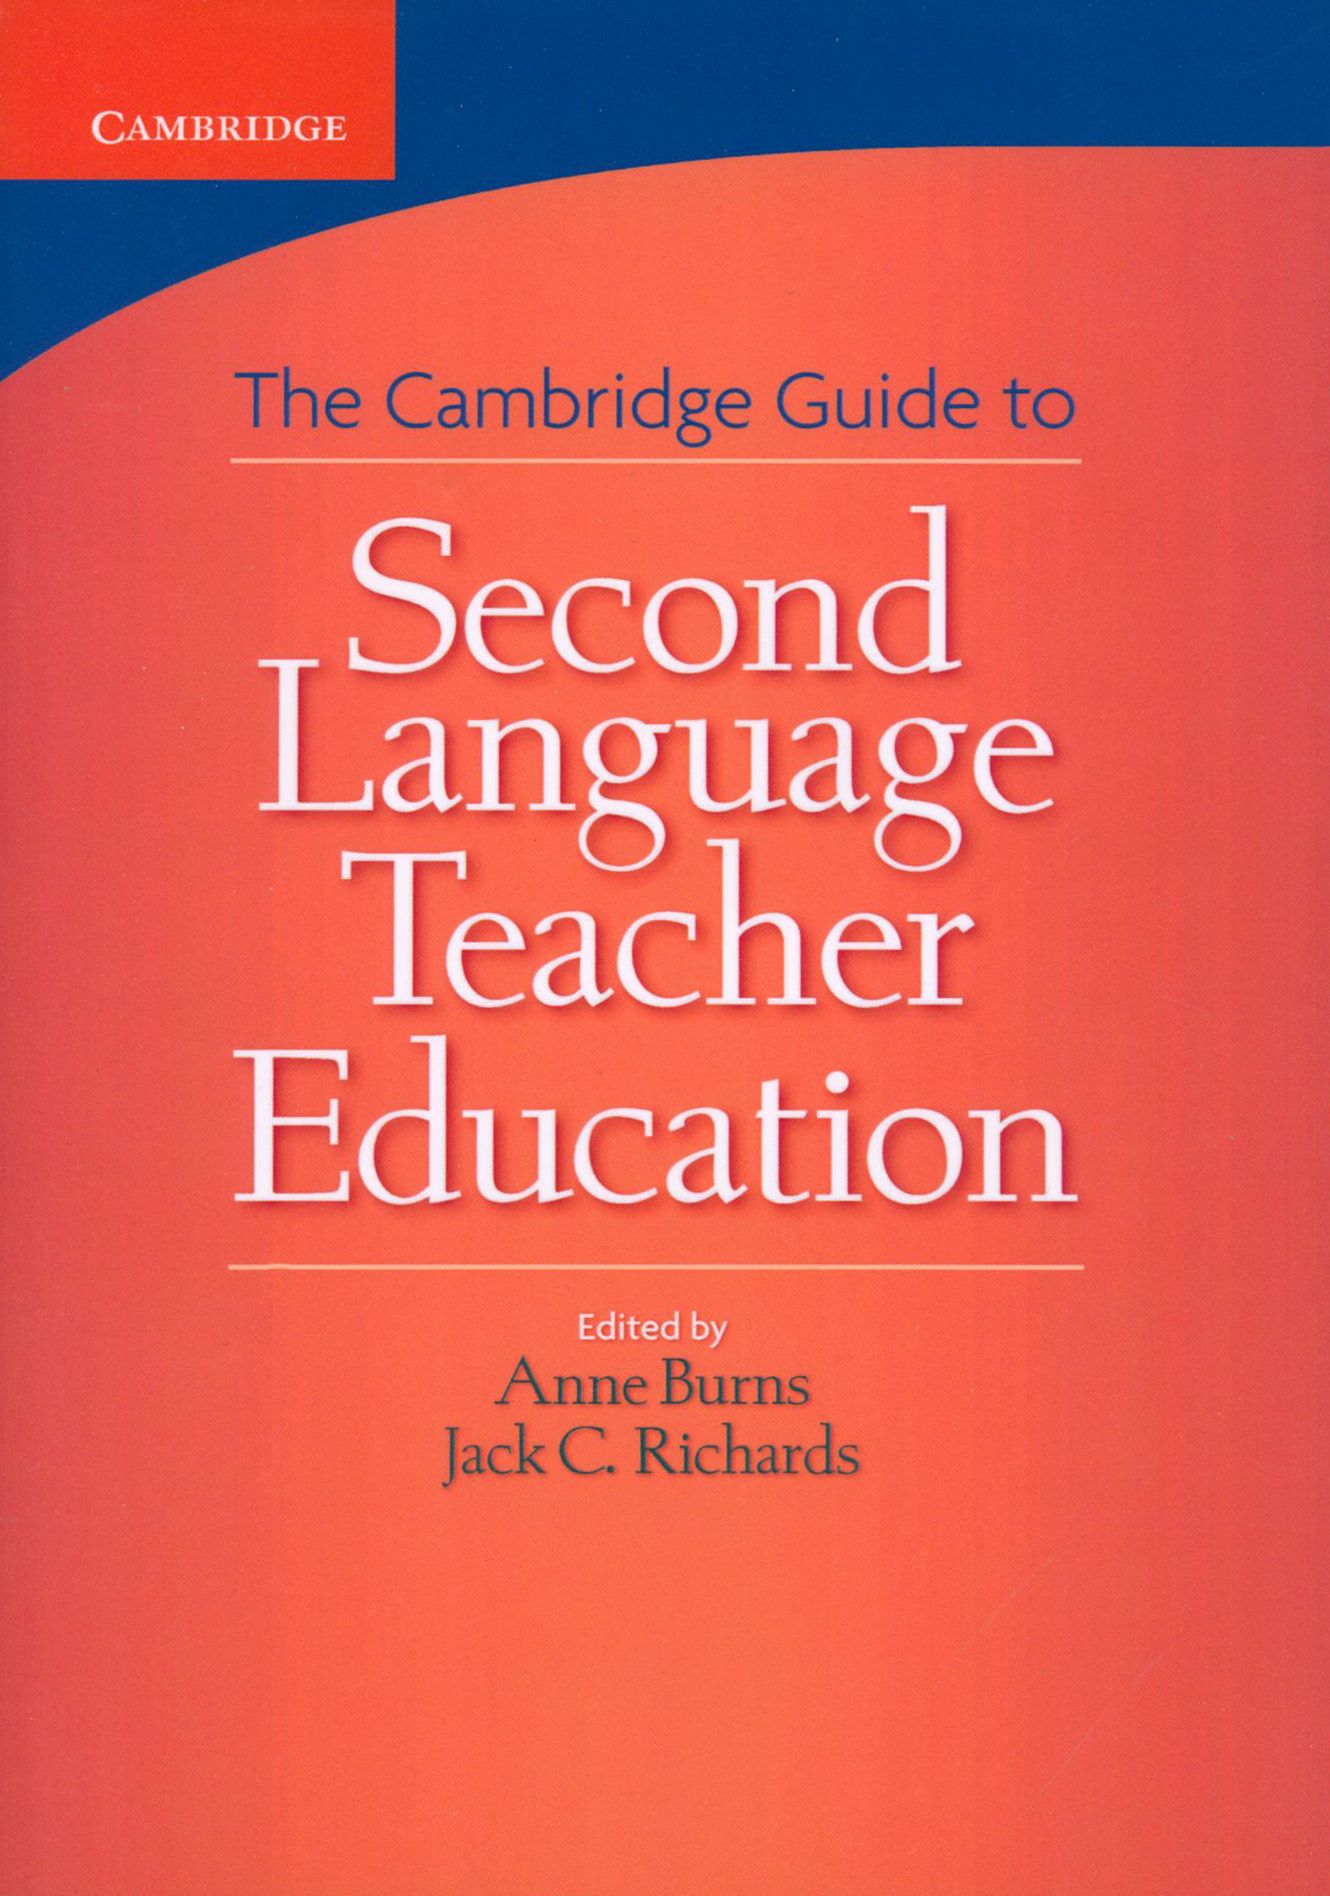 Деловой английский. Cambridge books. Cambridge teachers. Education debates and Issues.